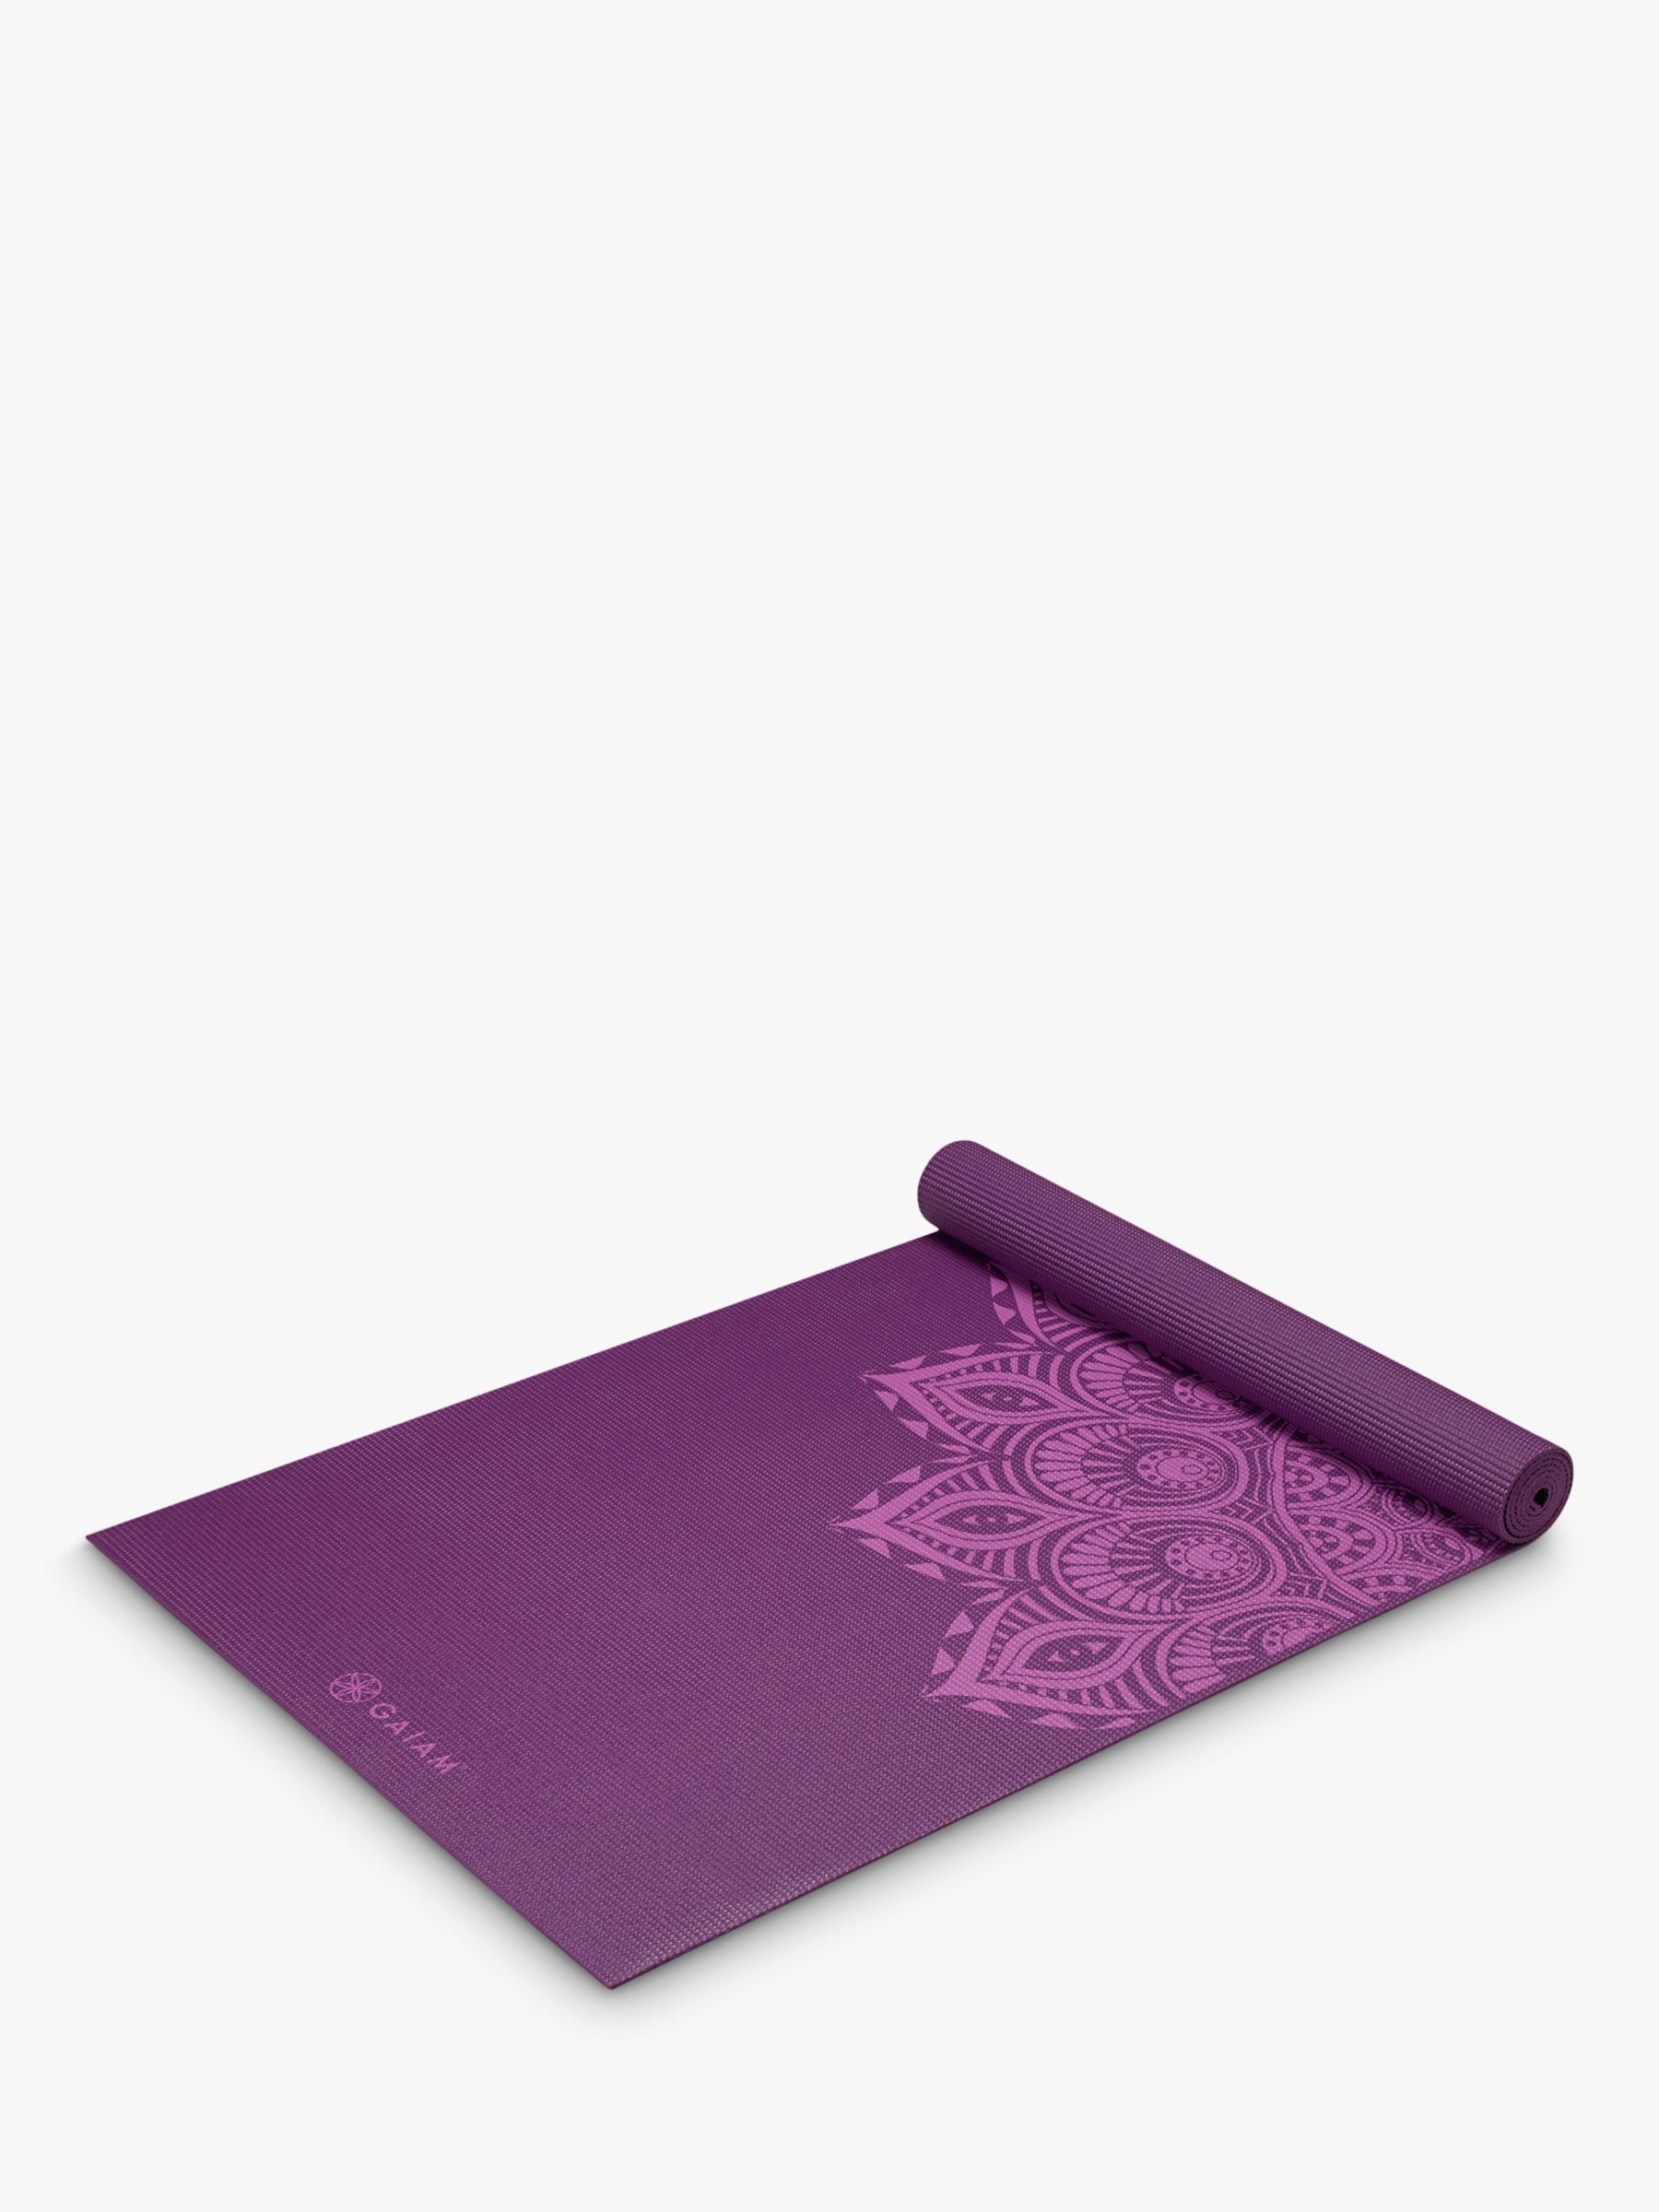 Gaiam Premium Yoga Mat - Black Midnight Mandala (6mm)